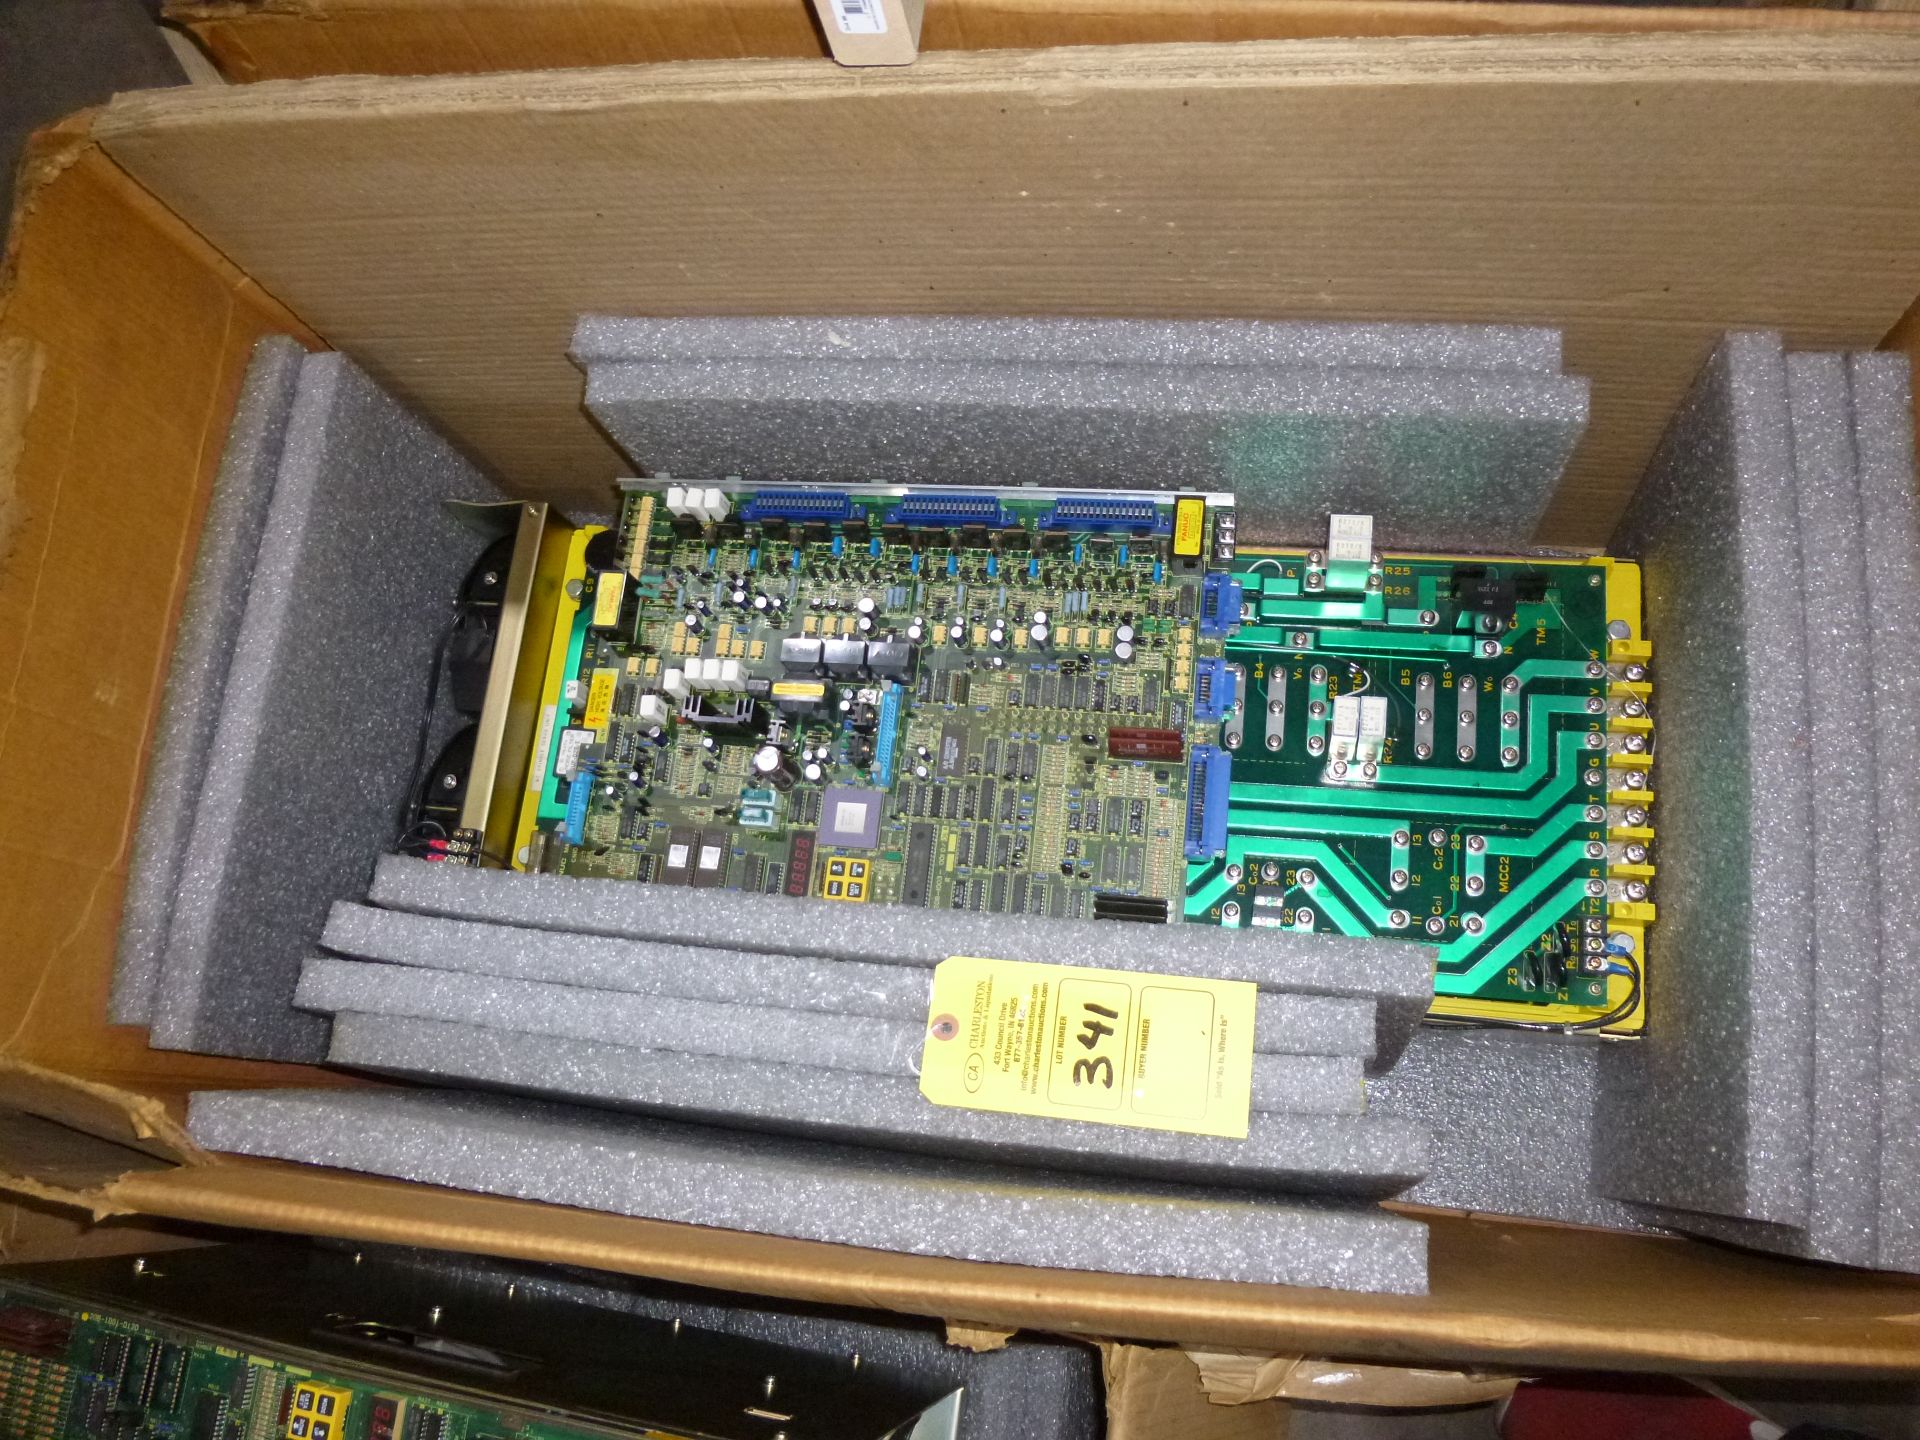 Fanuc AC spindle servo unit model A06B-6059-H218, appears new/unused in box, box shows wear, as